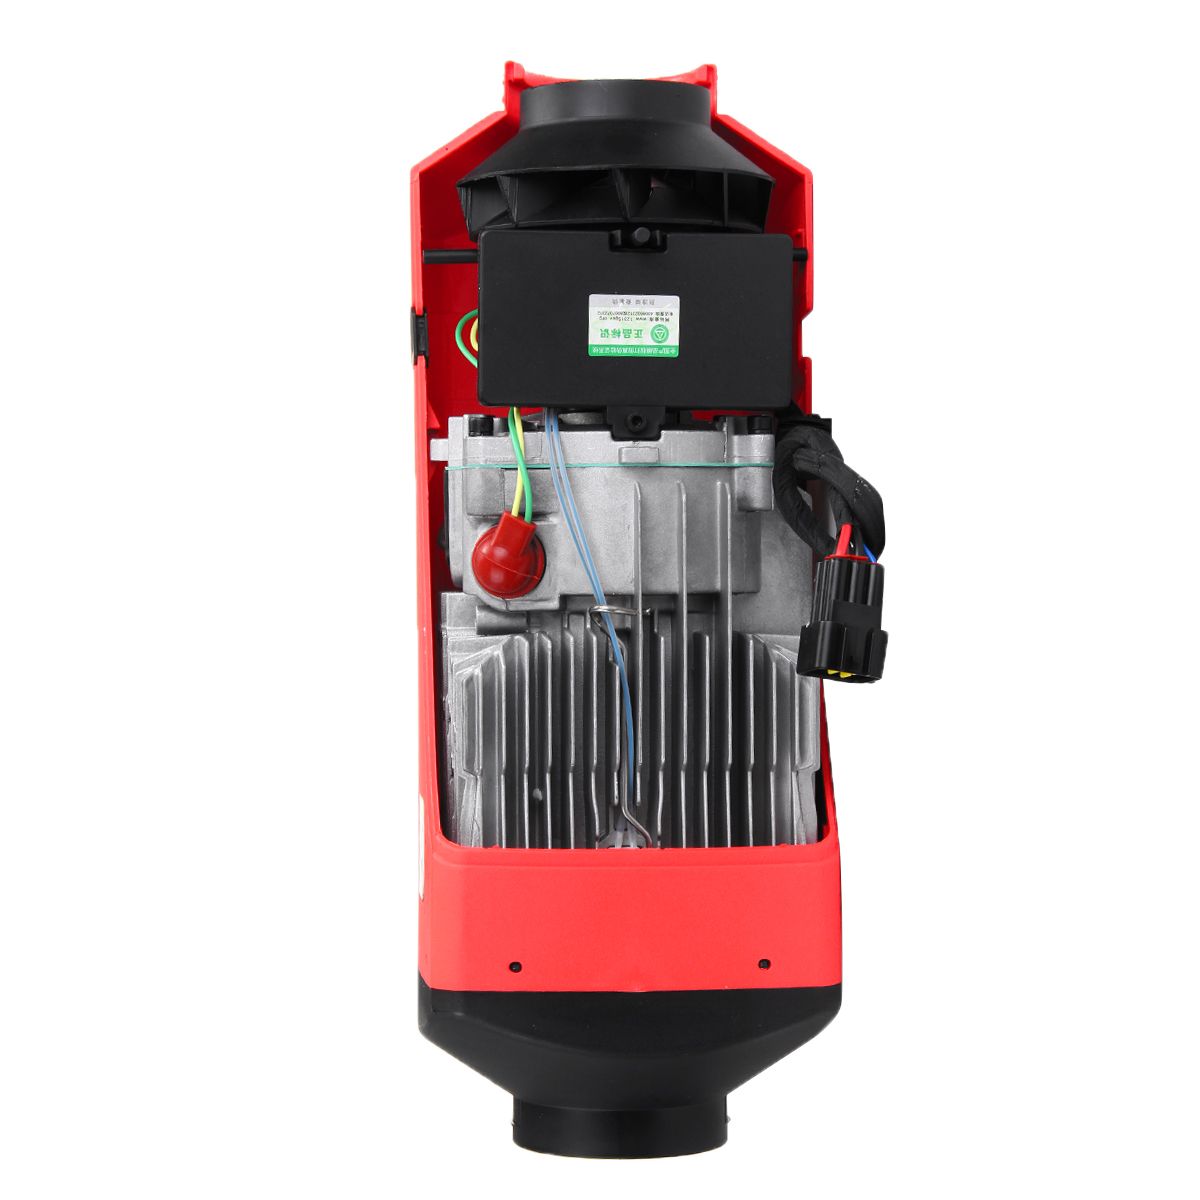 24V-1-8kw-Parking-Diesel-Air-Heater-New-Black-Liquid-Crystal-Switch-With-Muffler-1595080